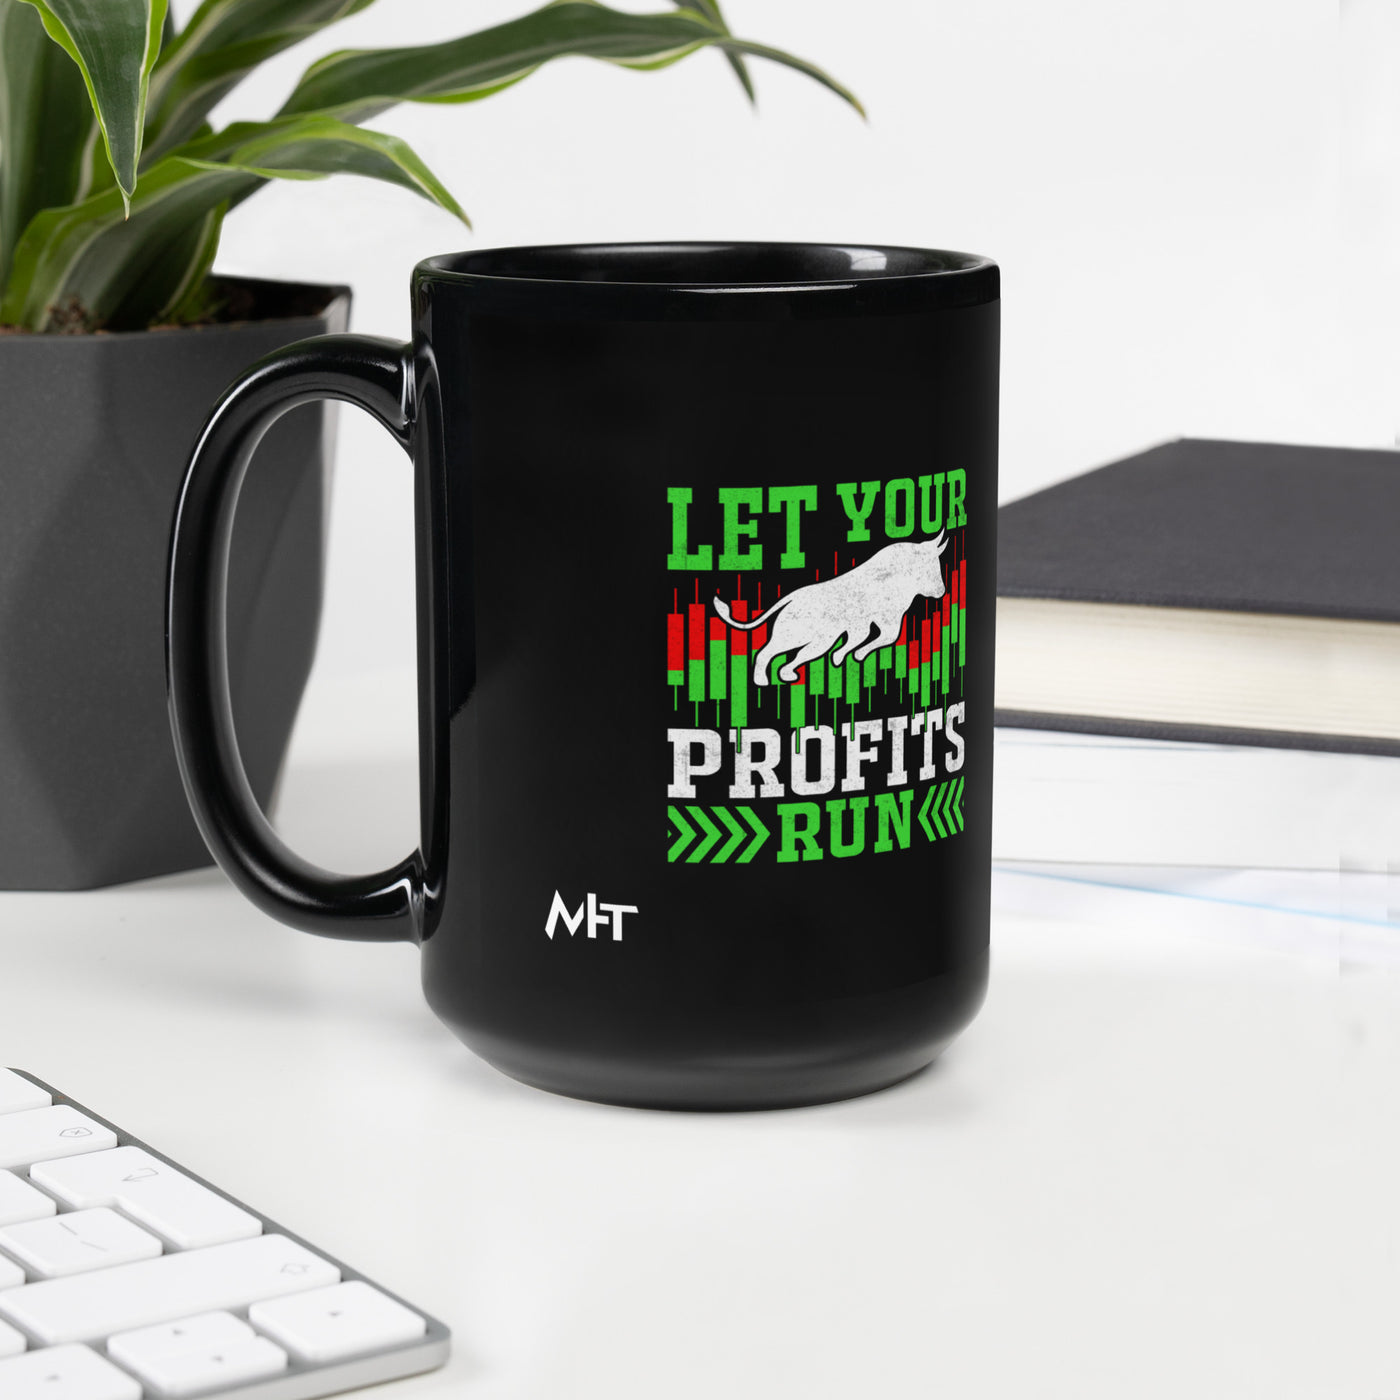 Let your Profits run - Black Glossy Mug